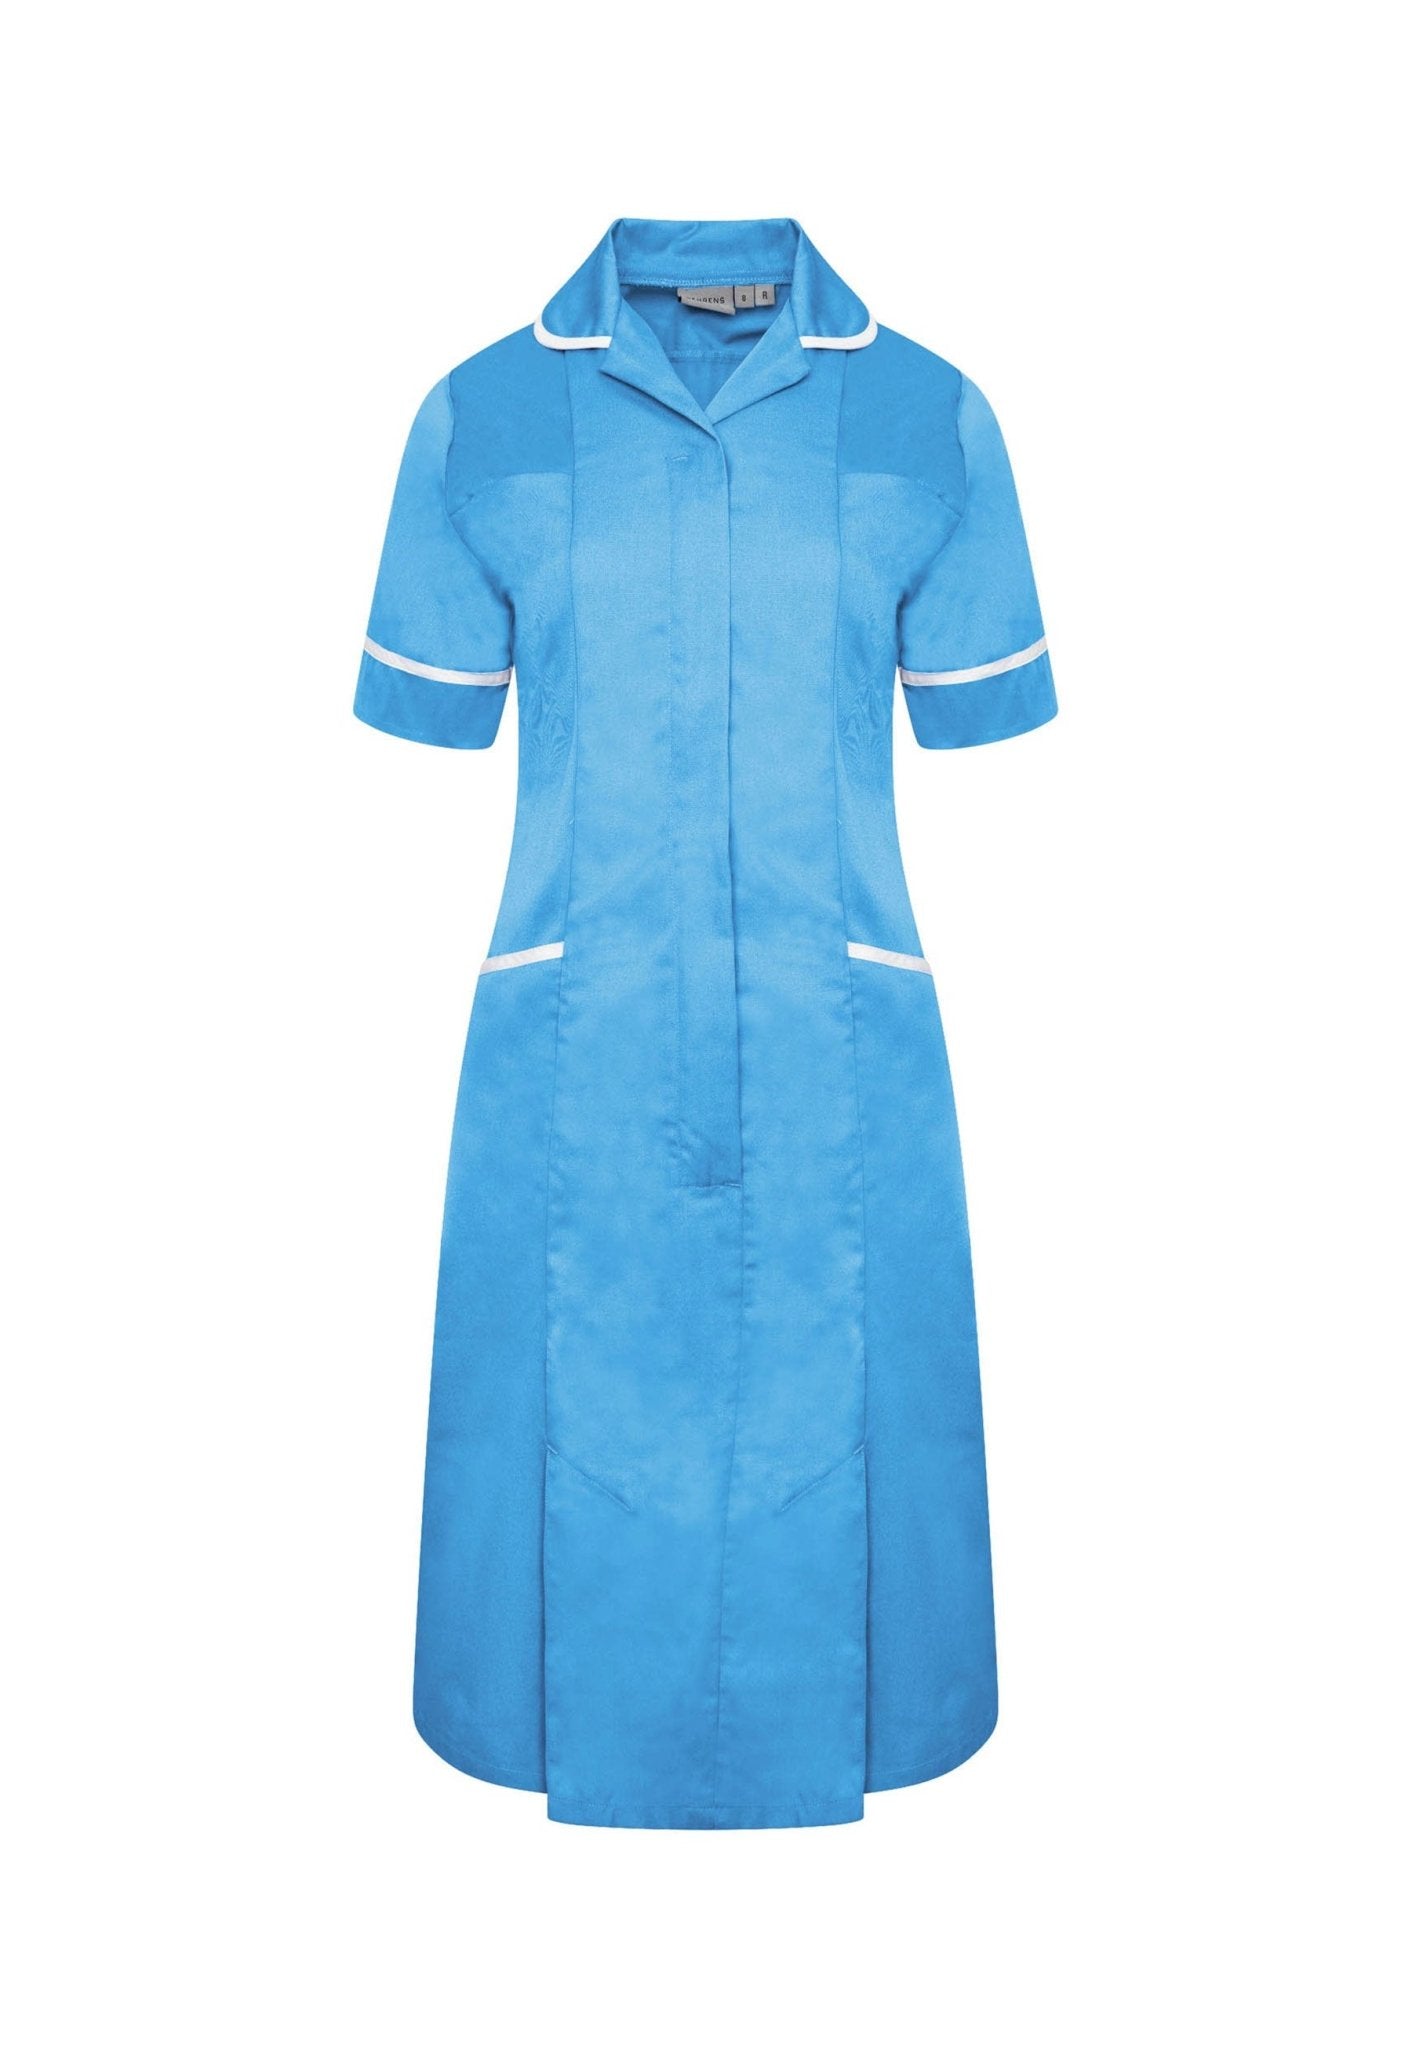 Light Blue Nurse Dress - The Work Uniform Company